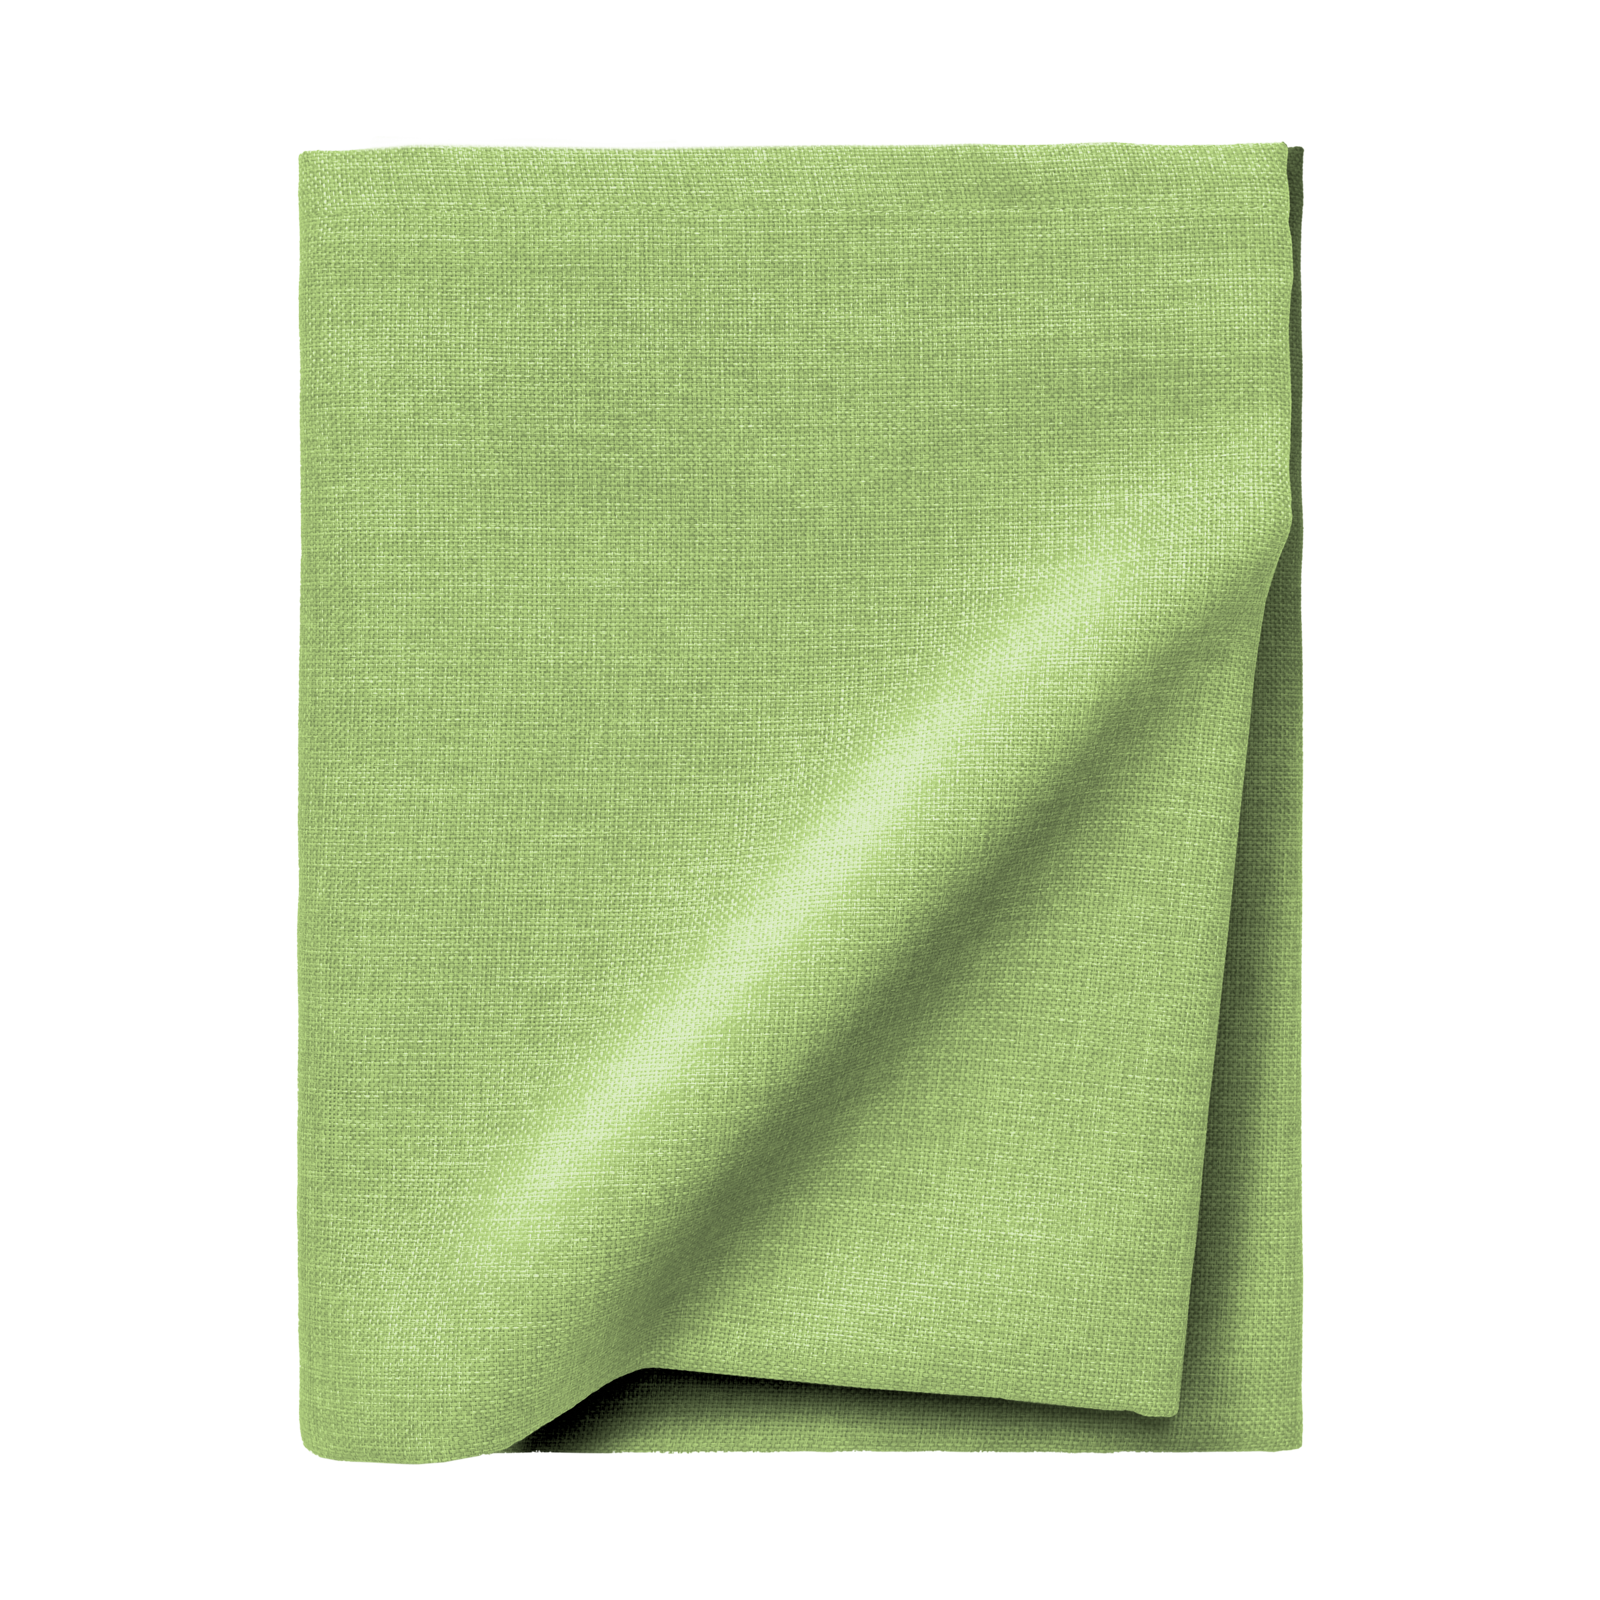 Größe: 85x 85 cm Farbe: grasgrün #farbe_grasgrün